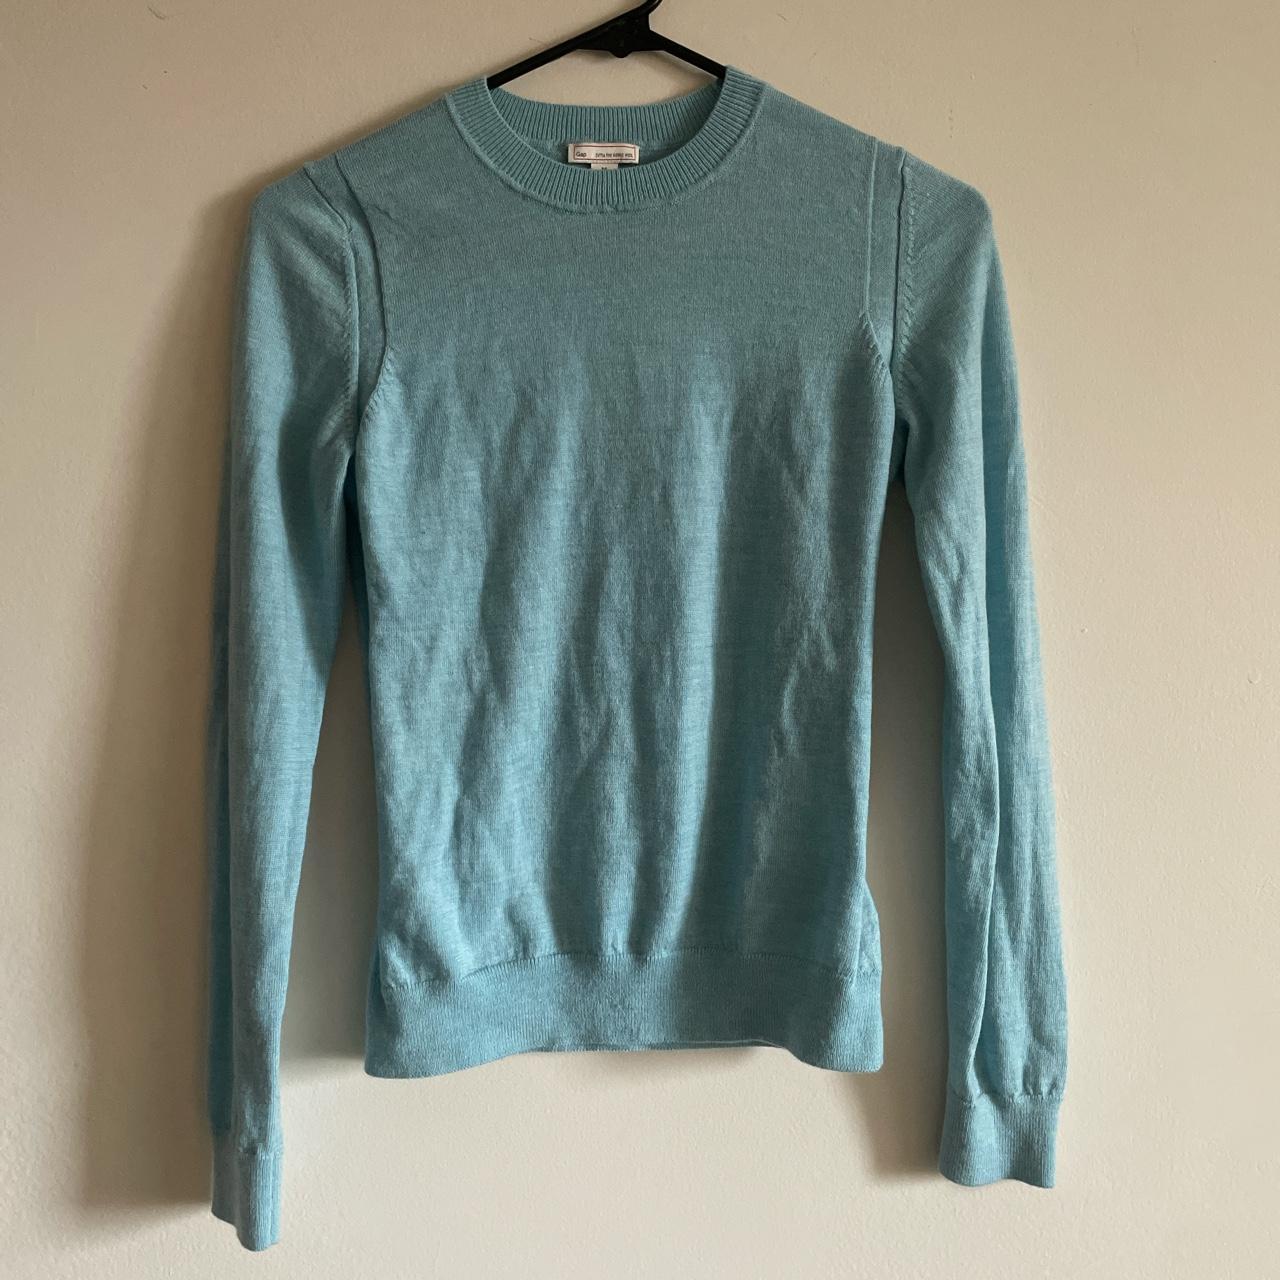 Merino Wool Sweater 🩵 💐 20” from collar to bottom... - Depop